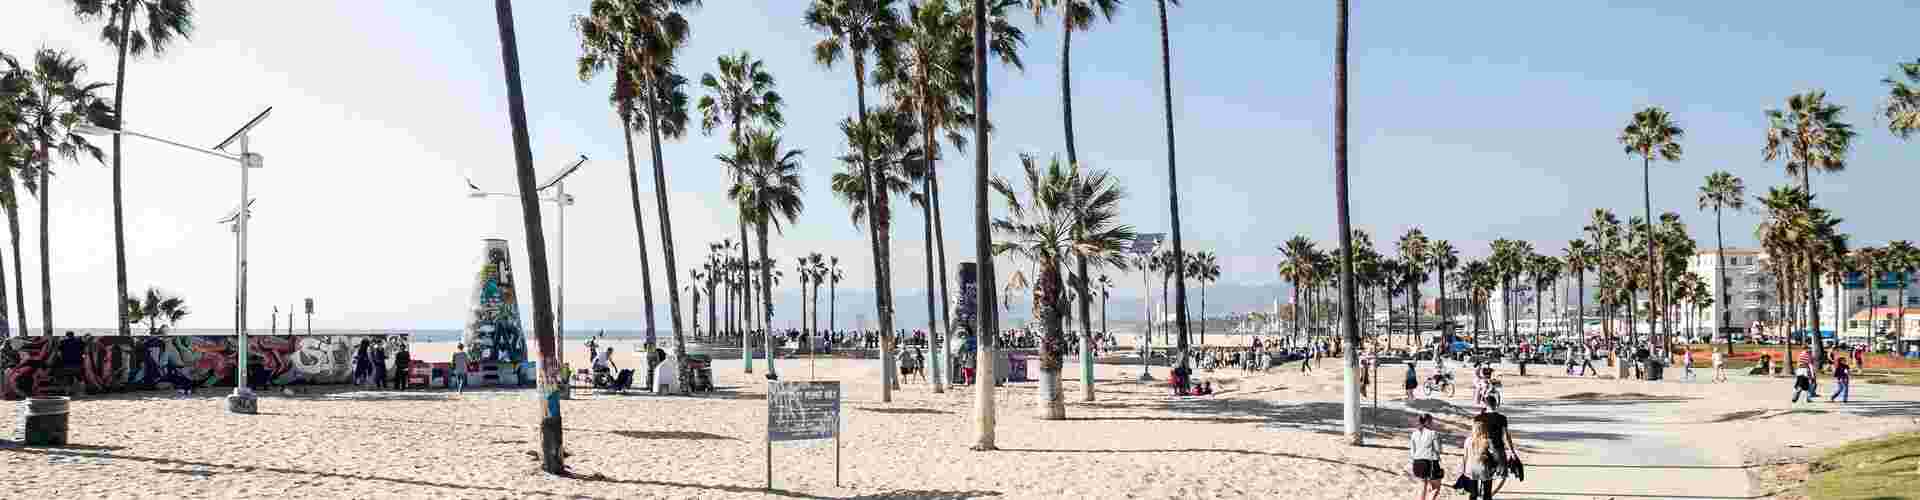 Venice Beach in Los Angeles in California